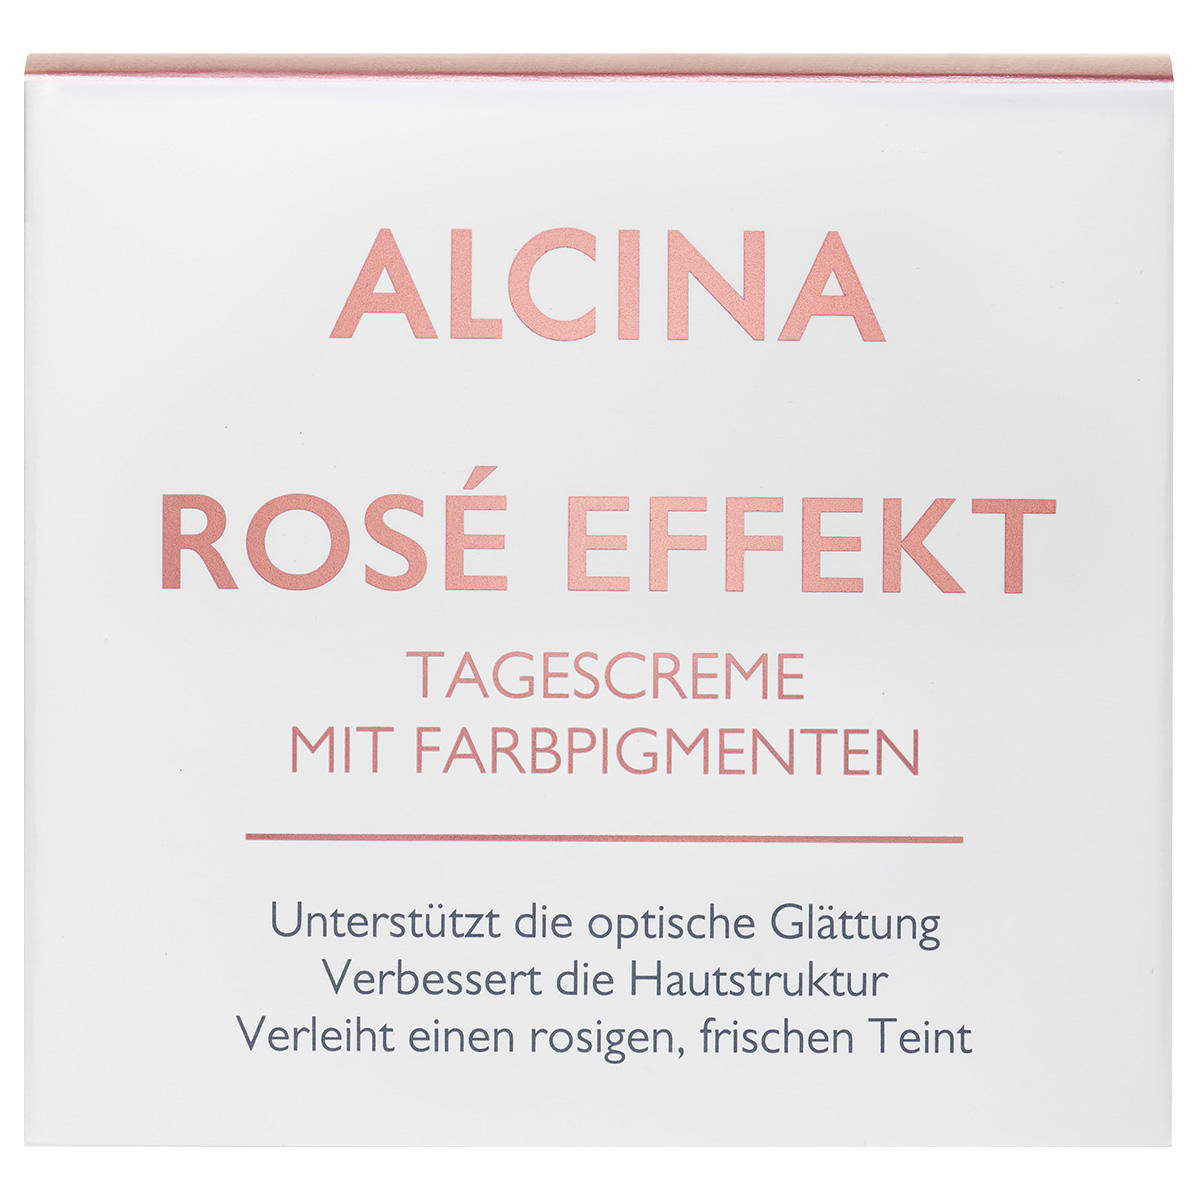 Alcina Rosé Effekt Crème de jour 50 ml - 3